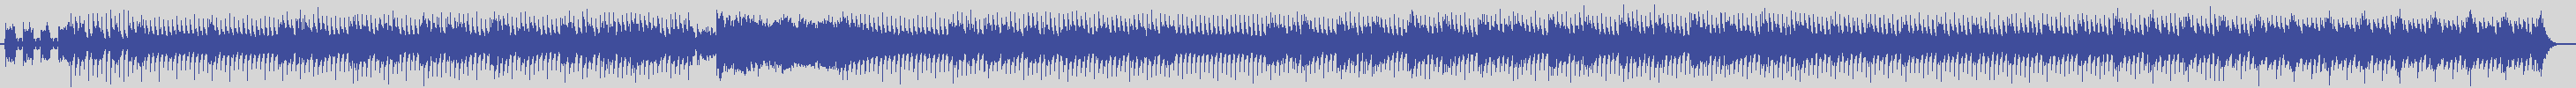 upr [UPRGOLD07] Larme Blanche - 88mph [Original Mix] audio wave form